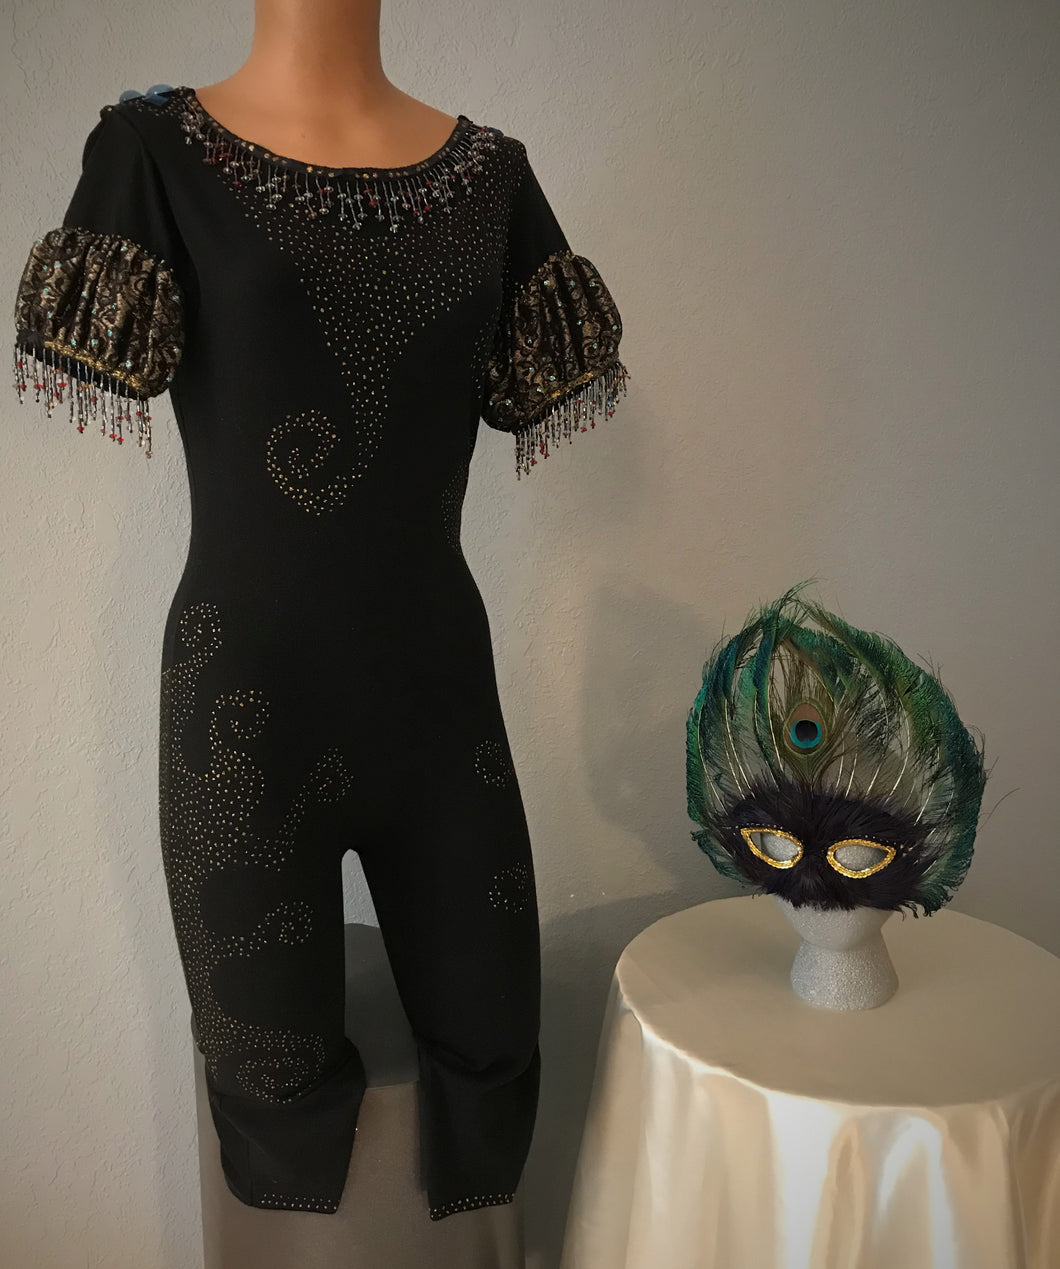 Black Embellished Unitard Woman's Costume